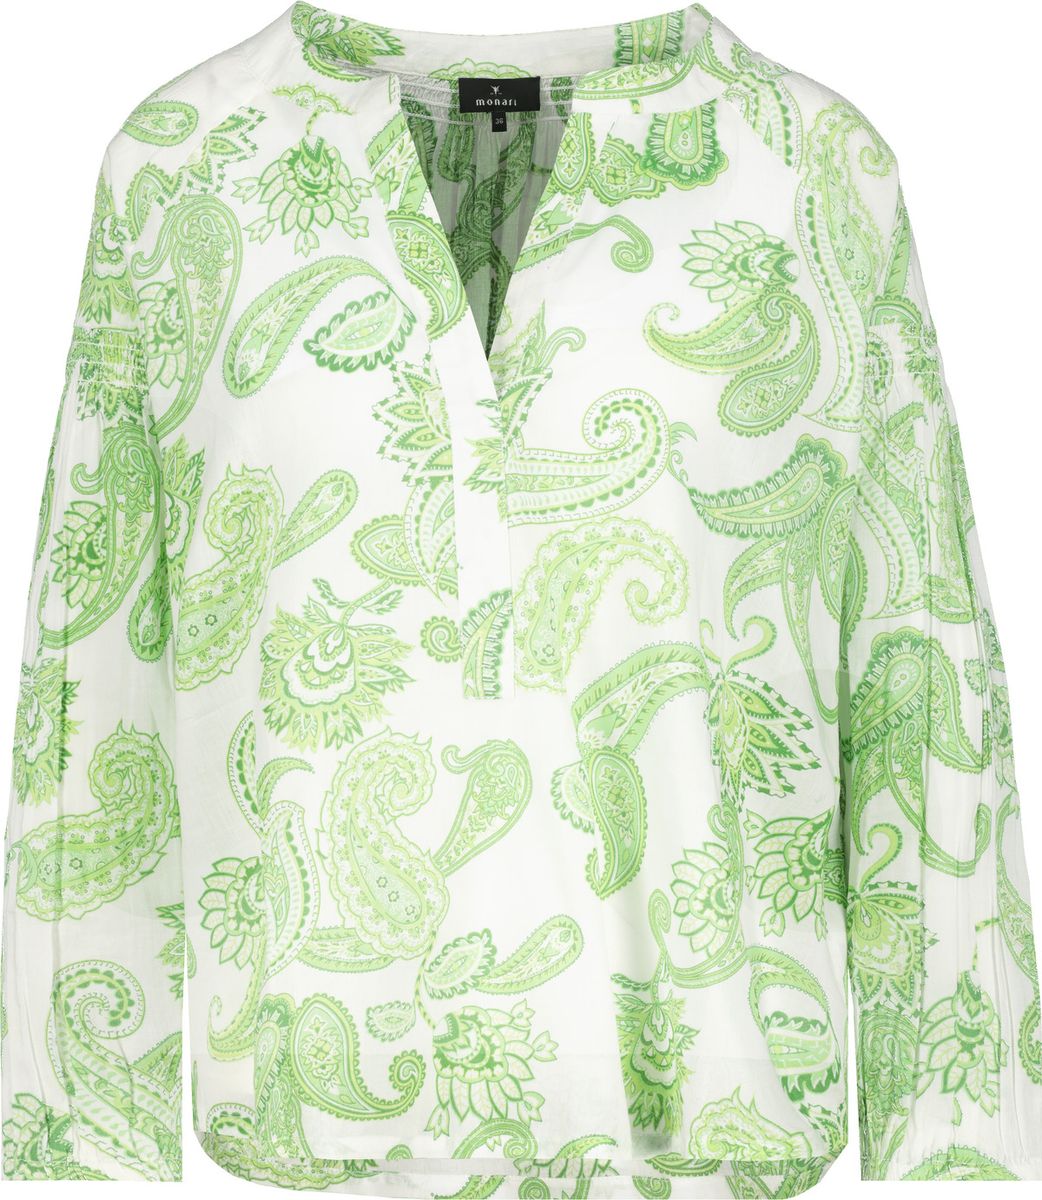 MONARI - Bluse, - green pastell Fahr Onlineshop gemustert Modehaus